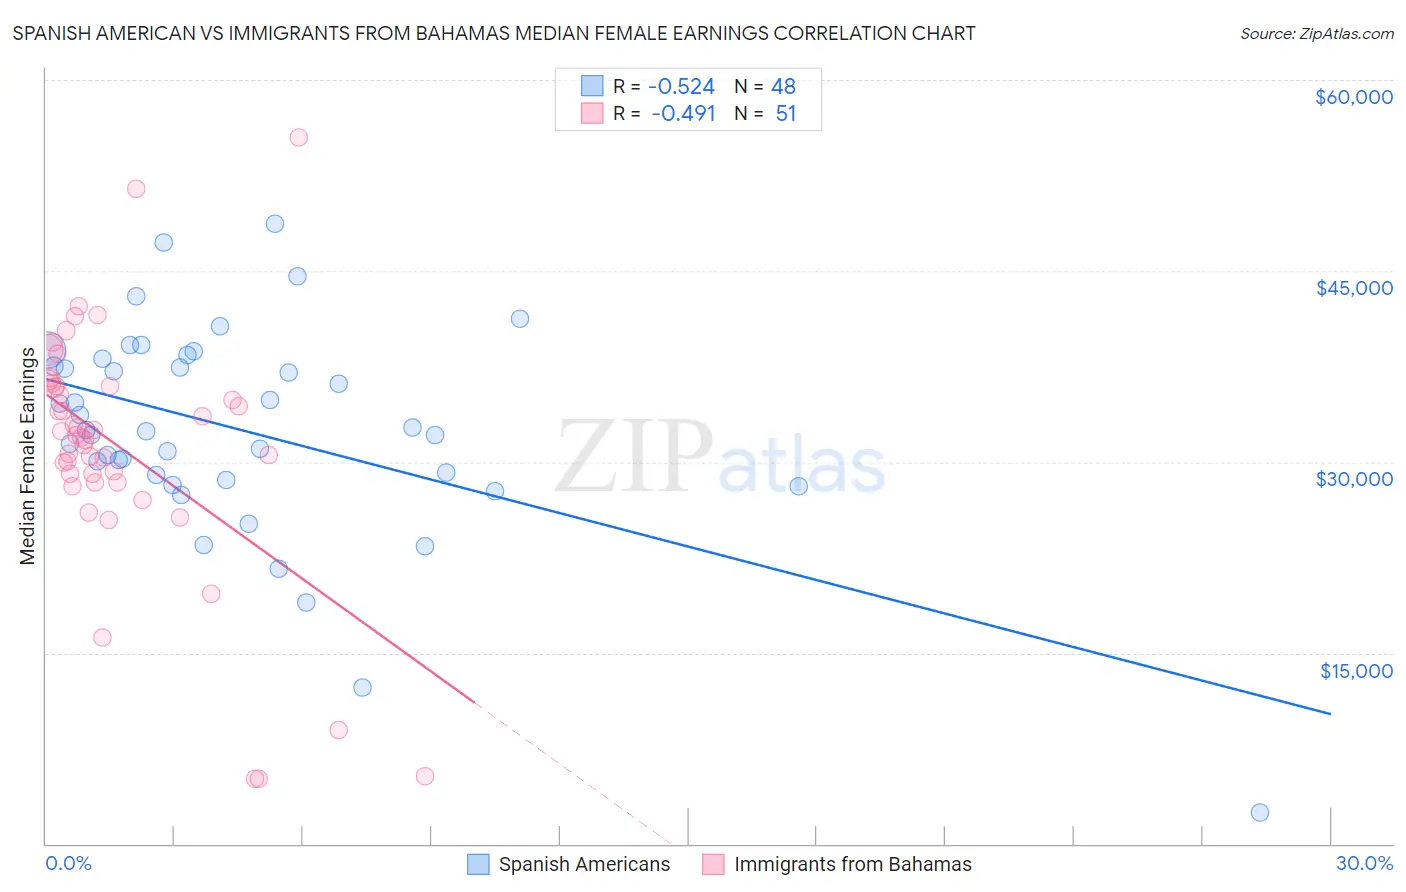 Spanish American vs Immigrants from Bahamas Median Female Earnings